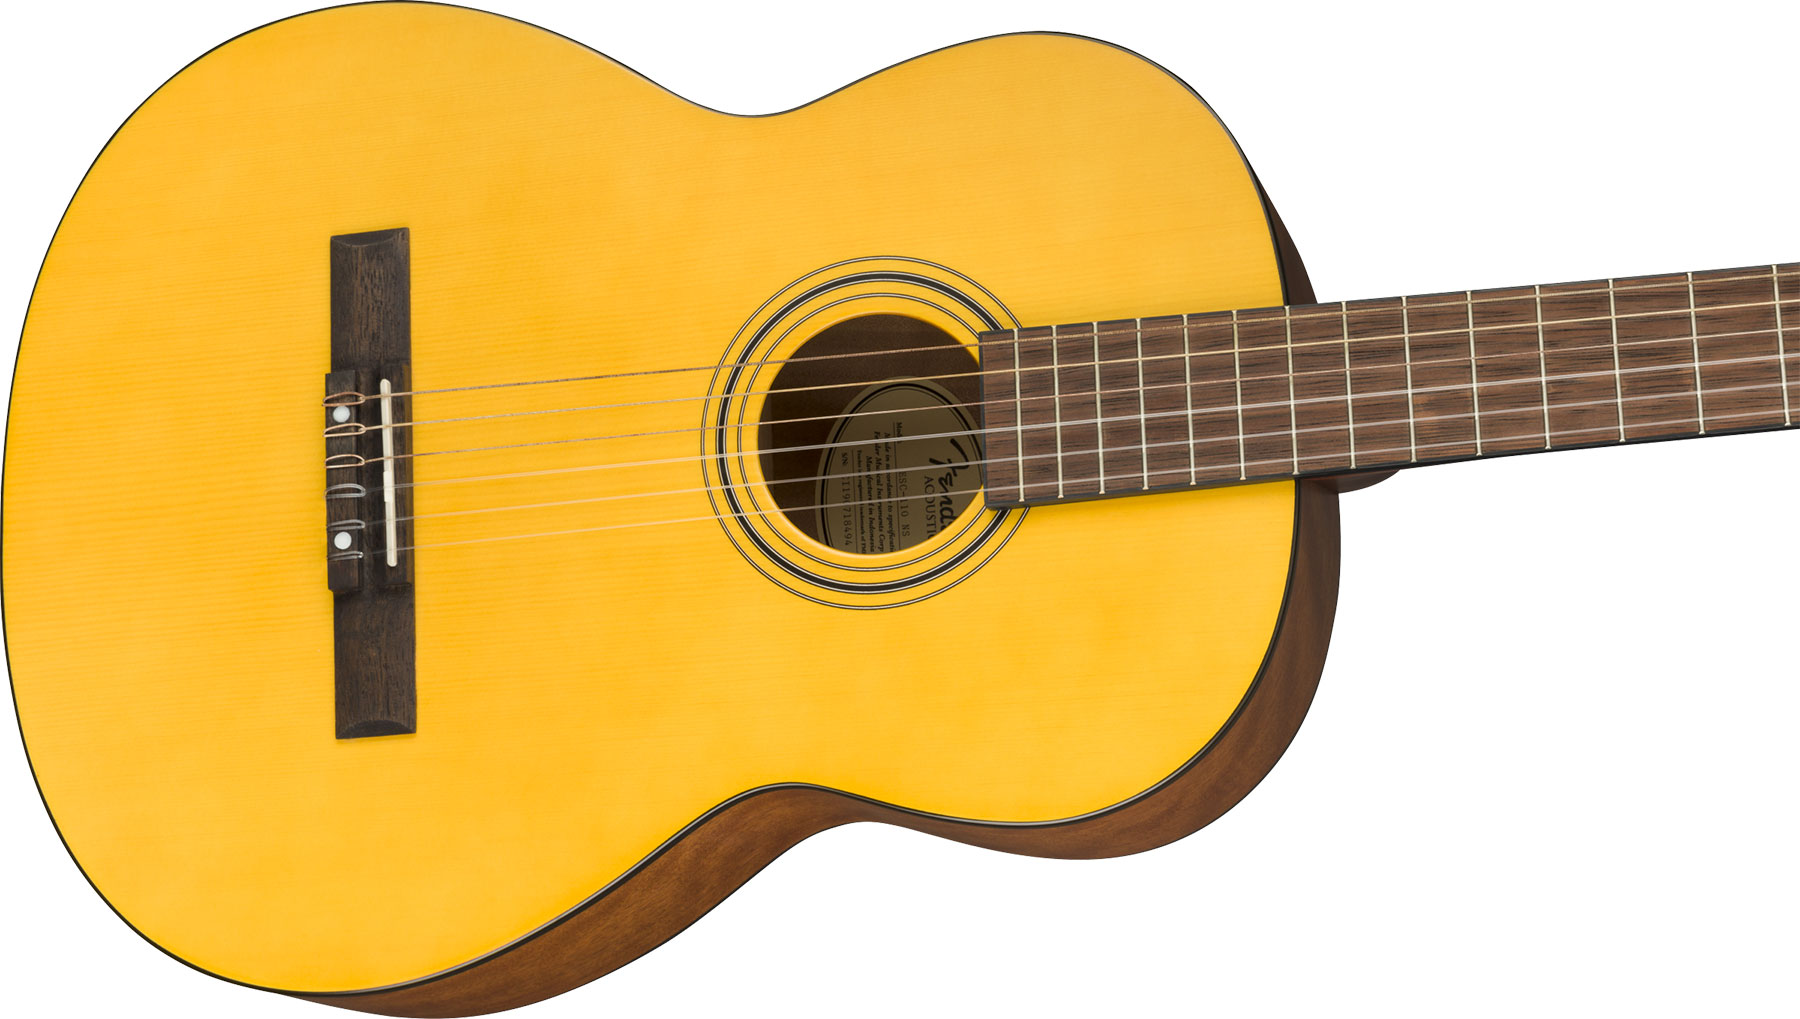 Fender Esc-110 Wide Neck Educational 4/4 Epicea Okoume Noy - Vintage Natural - Classical guitar 4/4 size - Variation 2